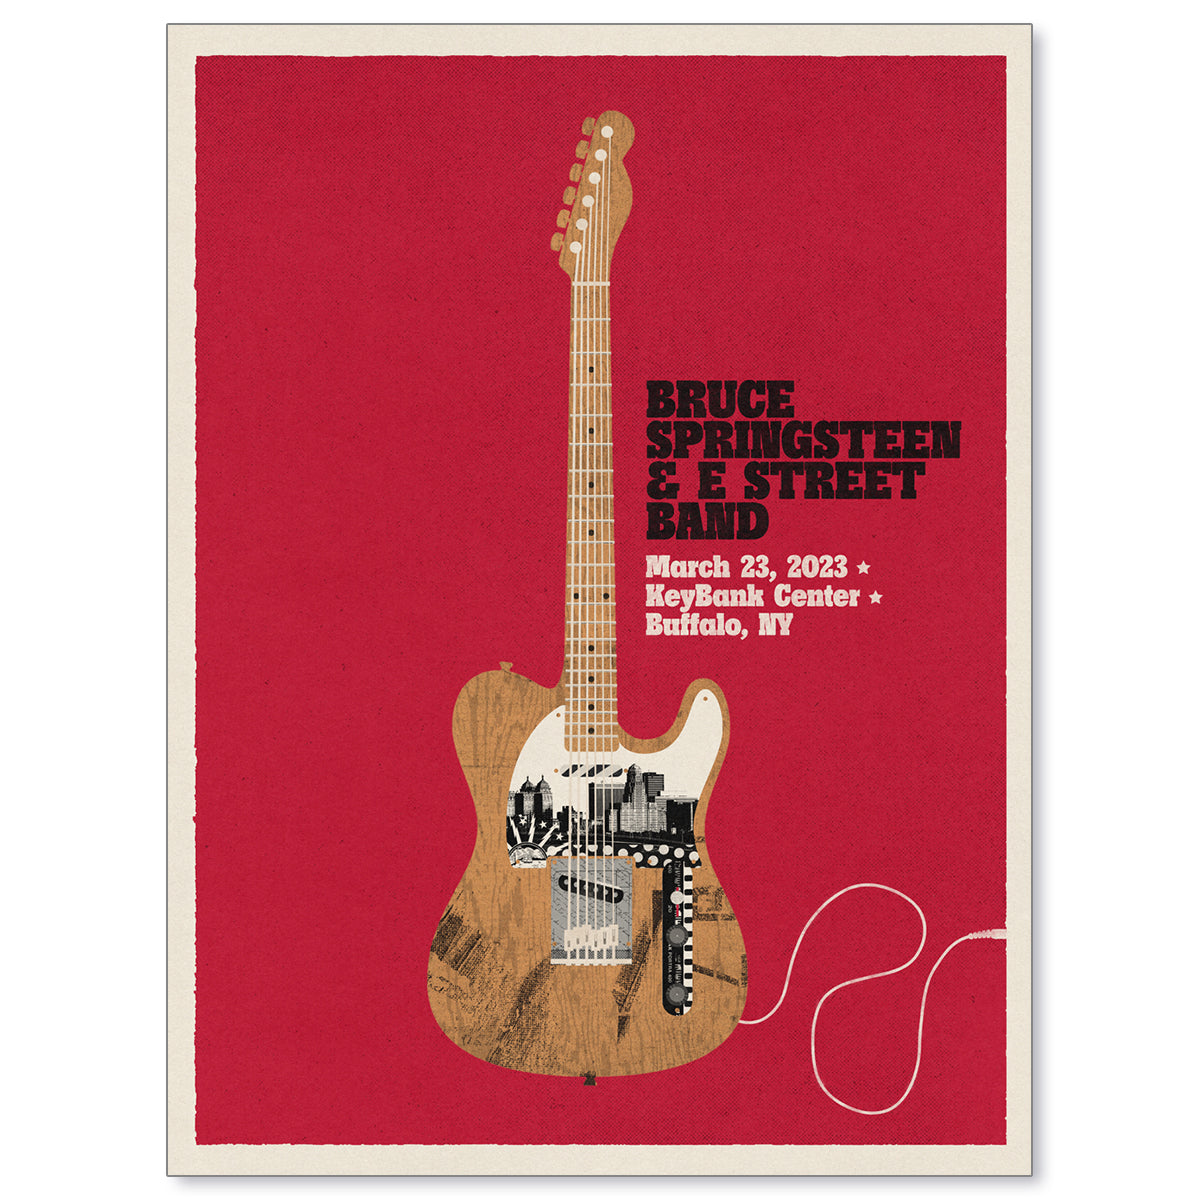 Bruce Springsteen & E Street Band Buffalo March 23, 2023